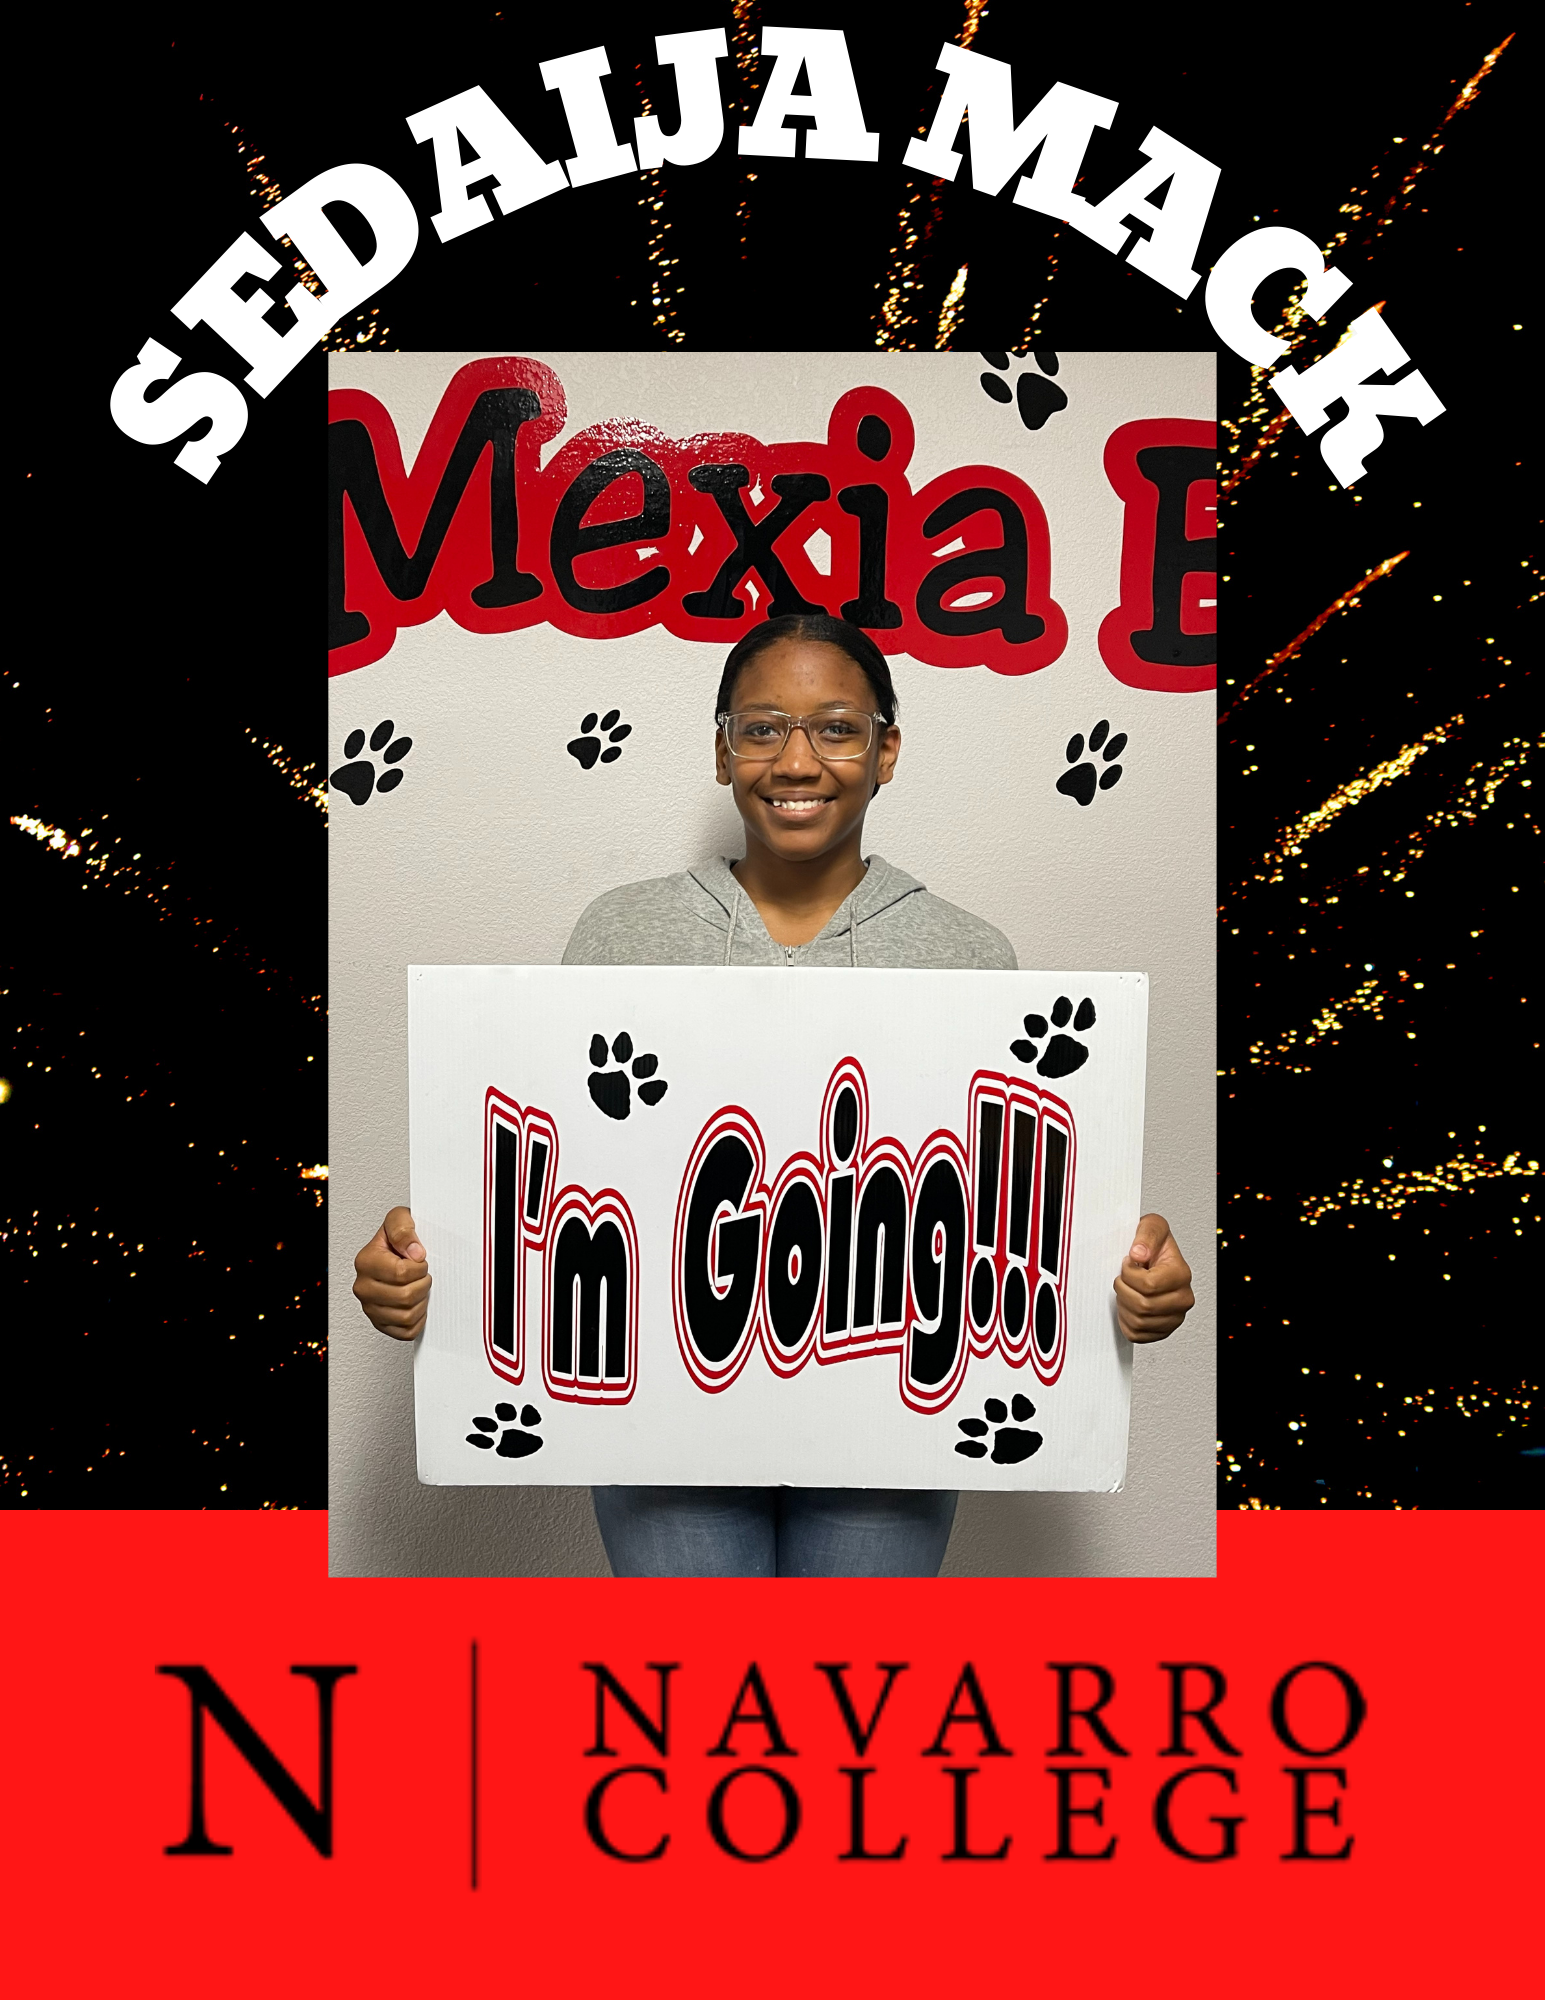 Sedaija Mack - I'm Going! - Navarro College